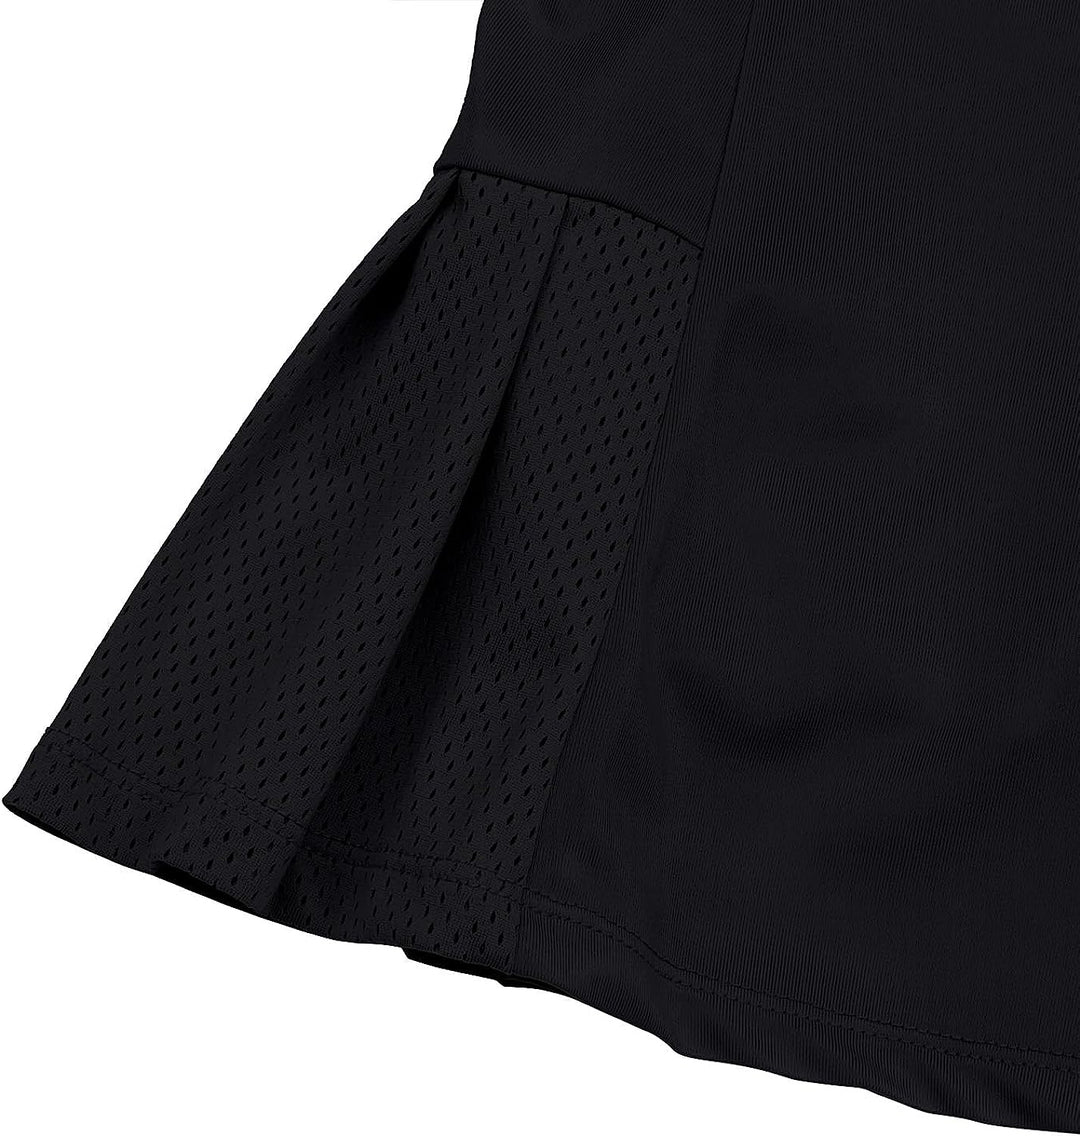 Girl's Plain Black Tennis Golf Skirt with Anti-Slip Pants and Pockets | JOYSTREAM